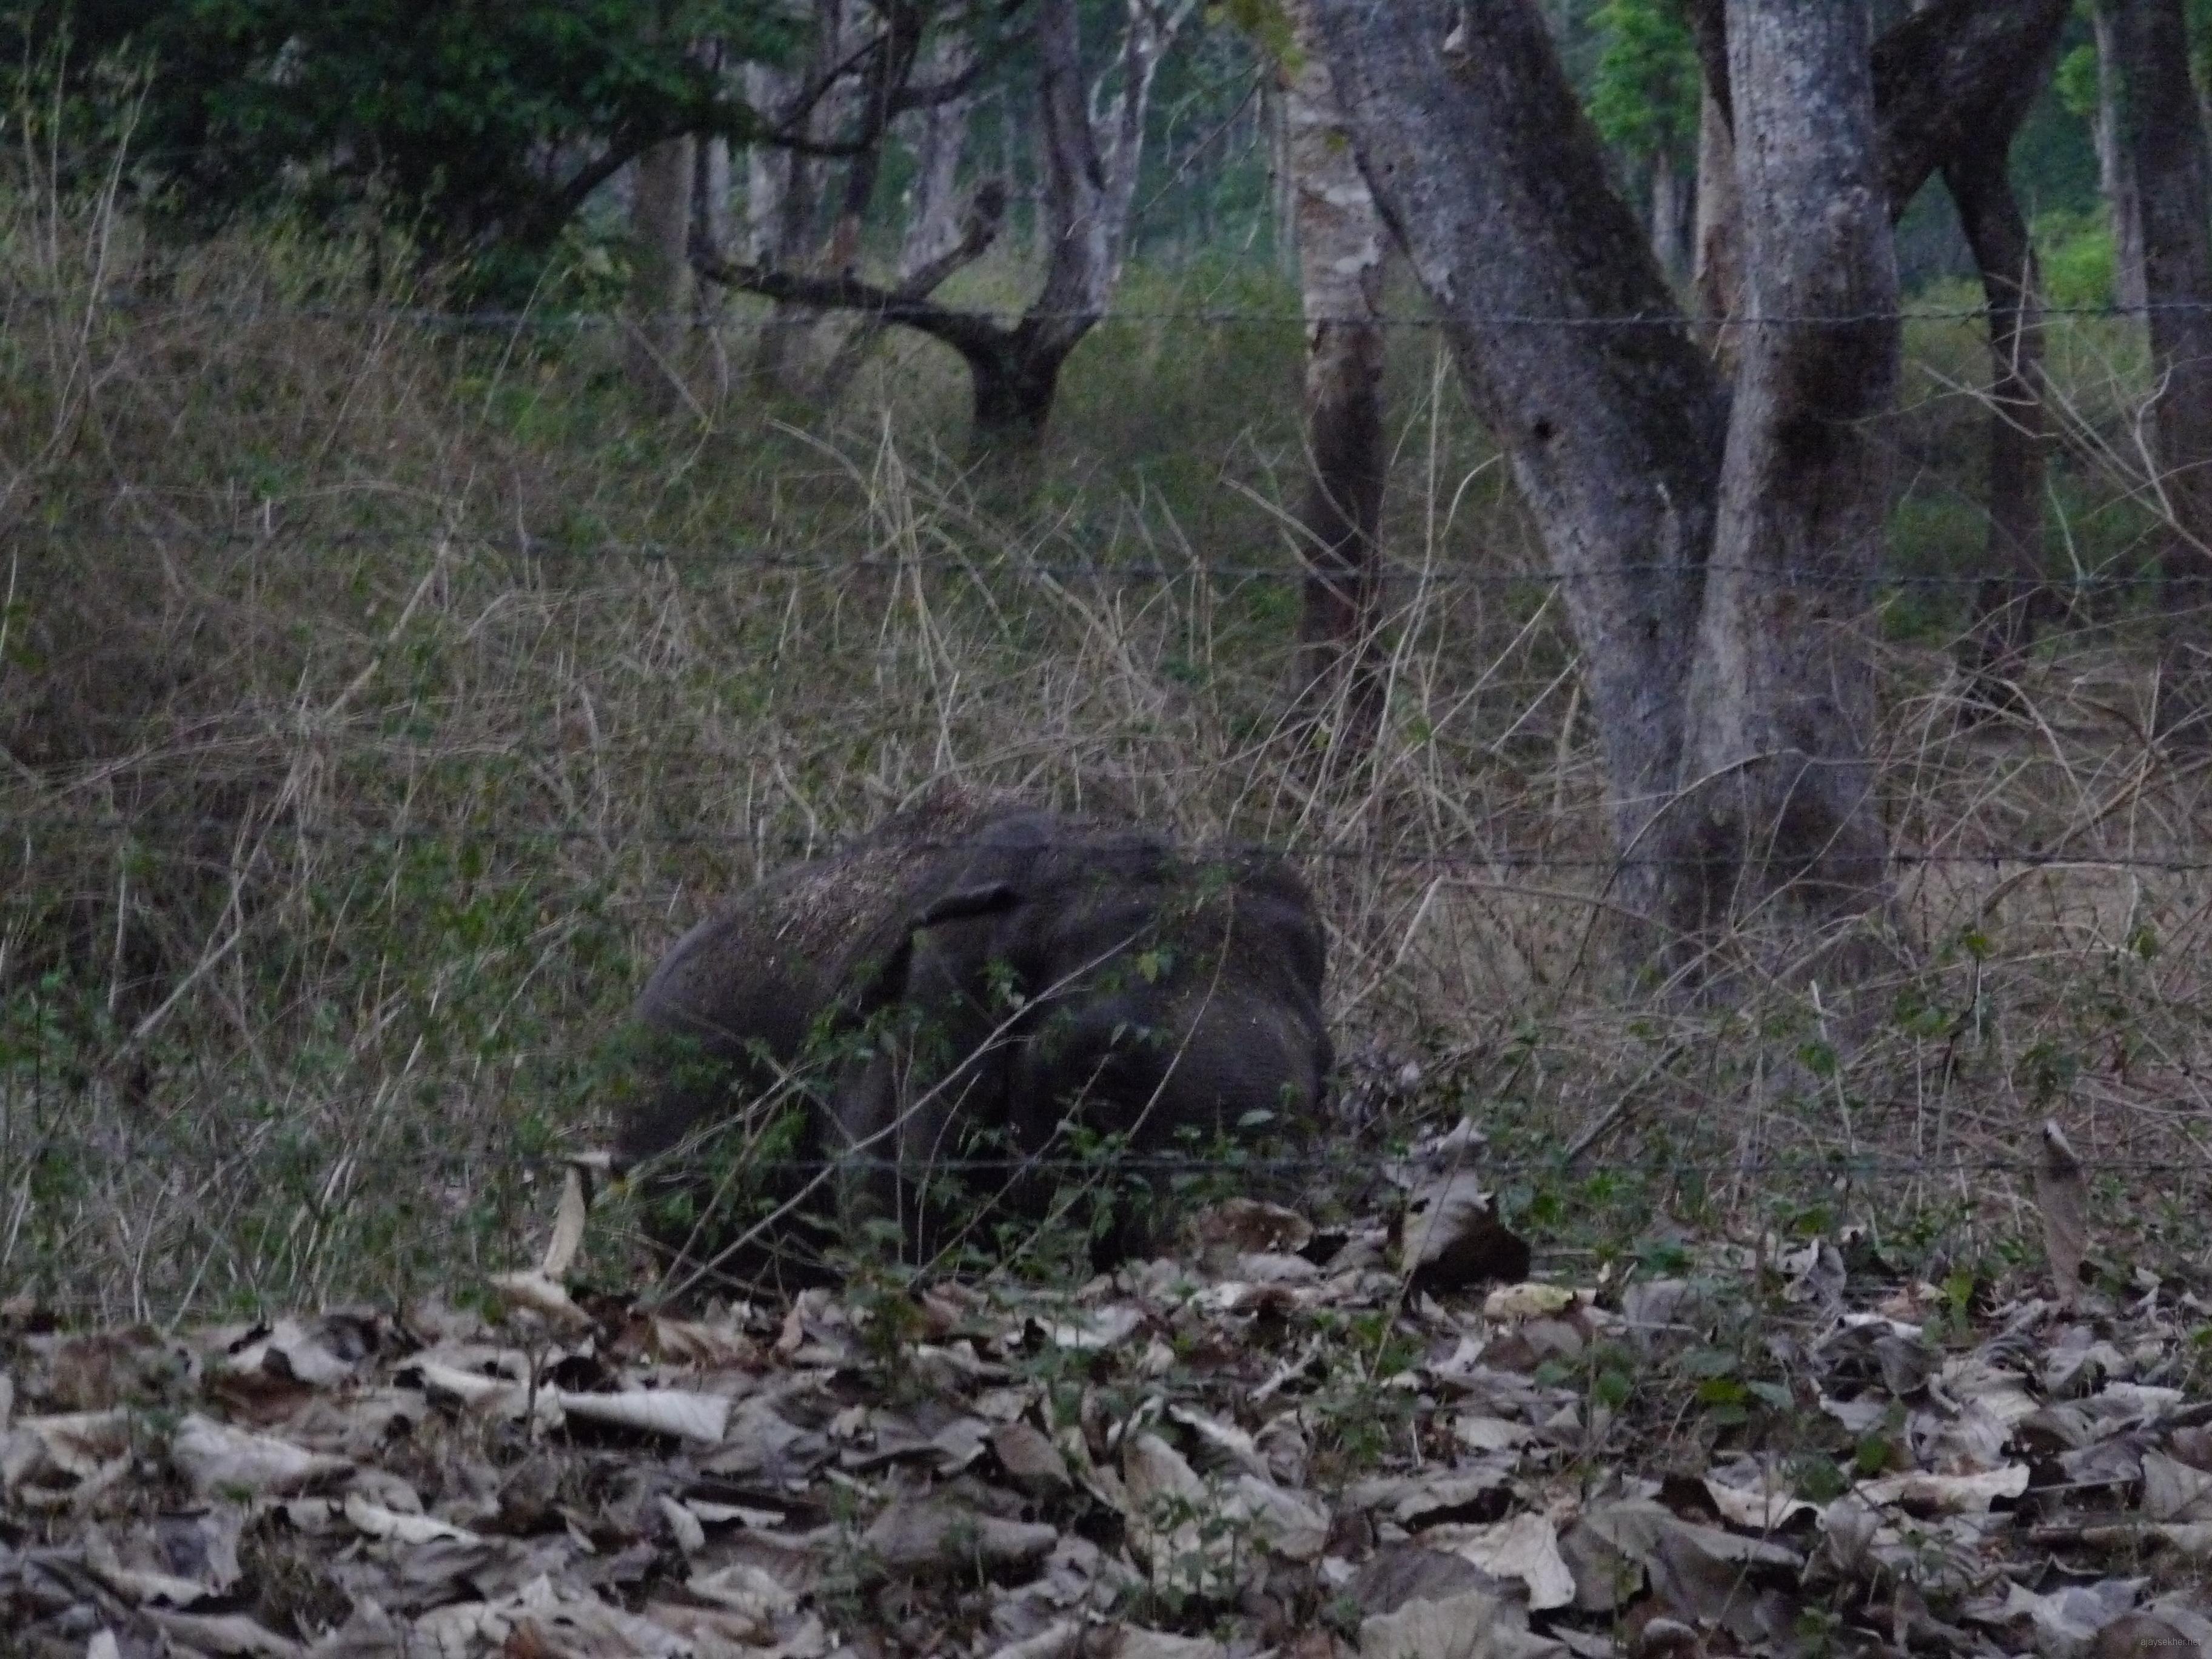 A wild elephant in the Nisargadhama jungle, close to the Madikeri - Mysore highway